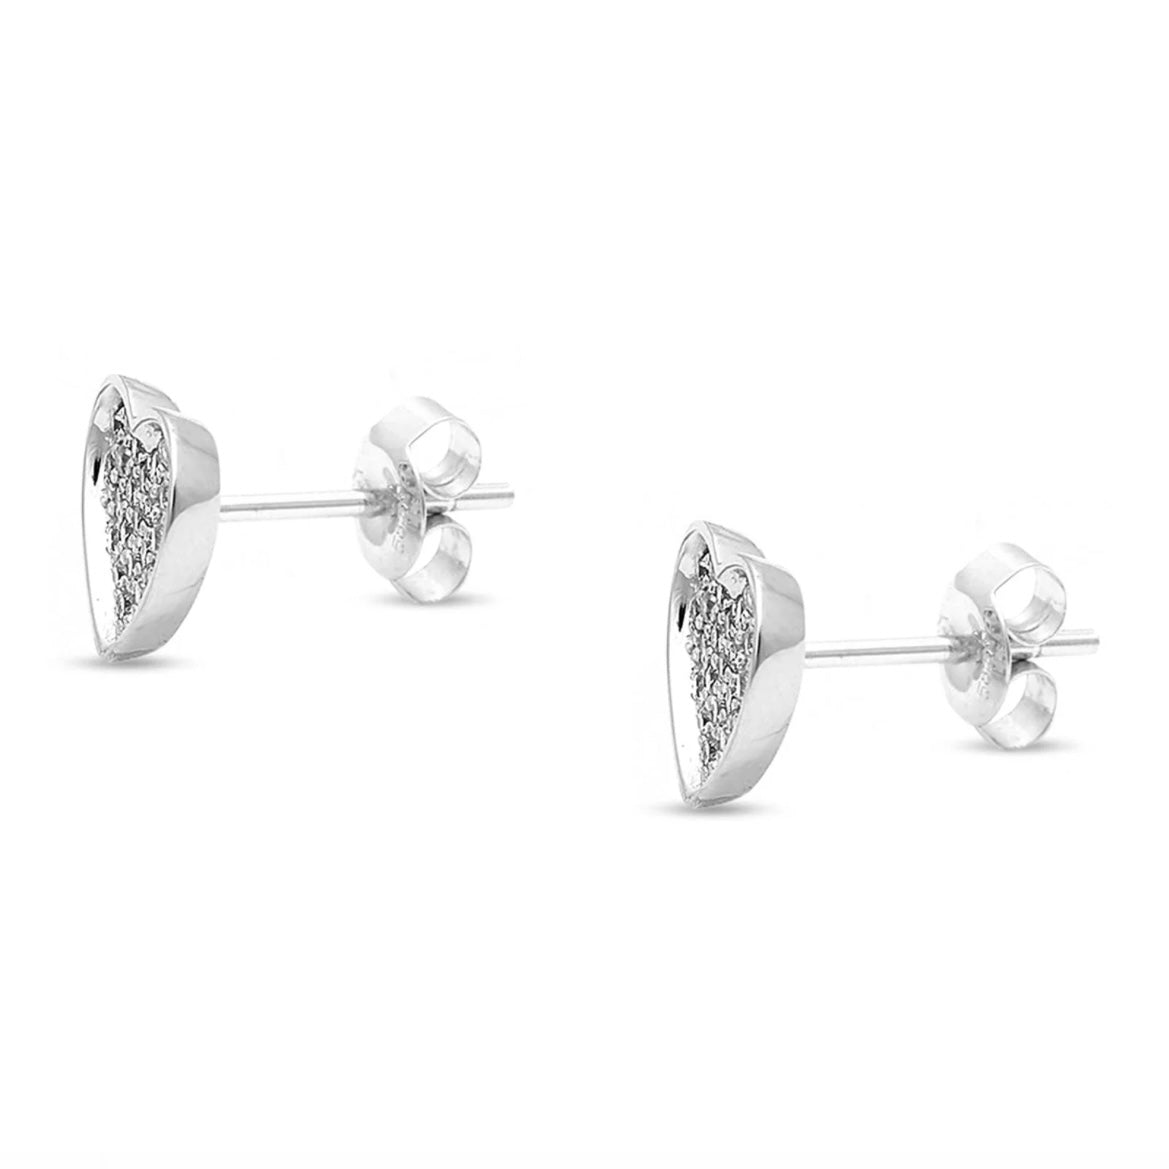 14K White Gold Heart Shaped Diamond Stud Earrings